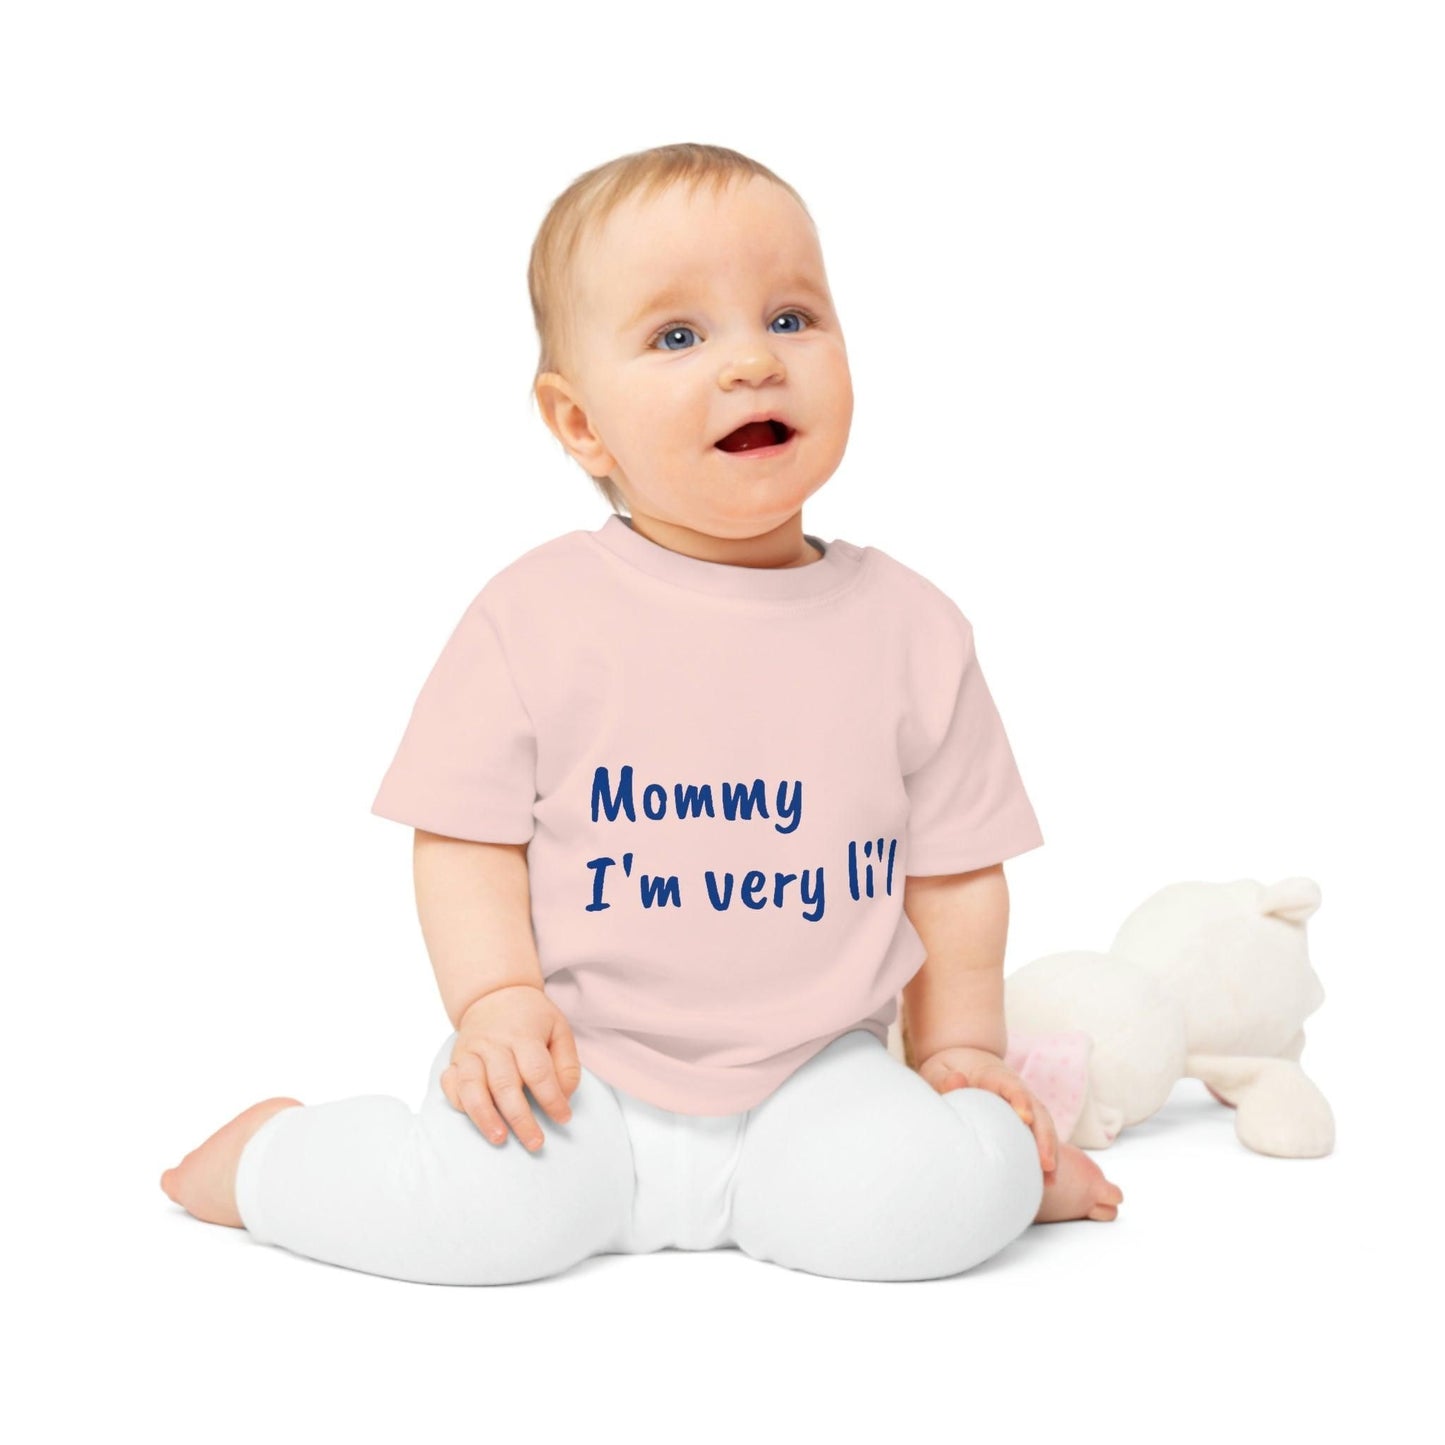 Baby T-Shirt - Mommy I'm very li'l (UK/Ireland) - e-mandi